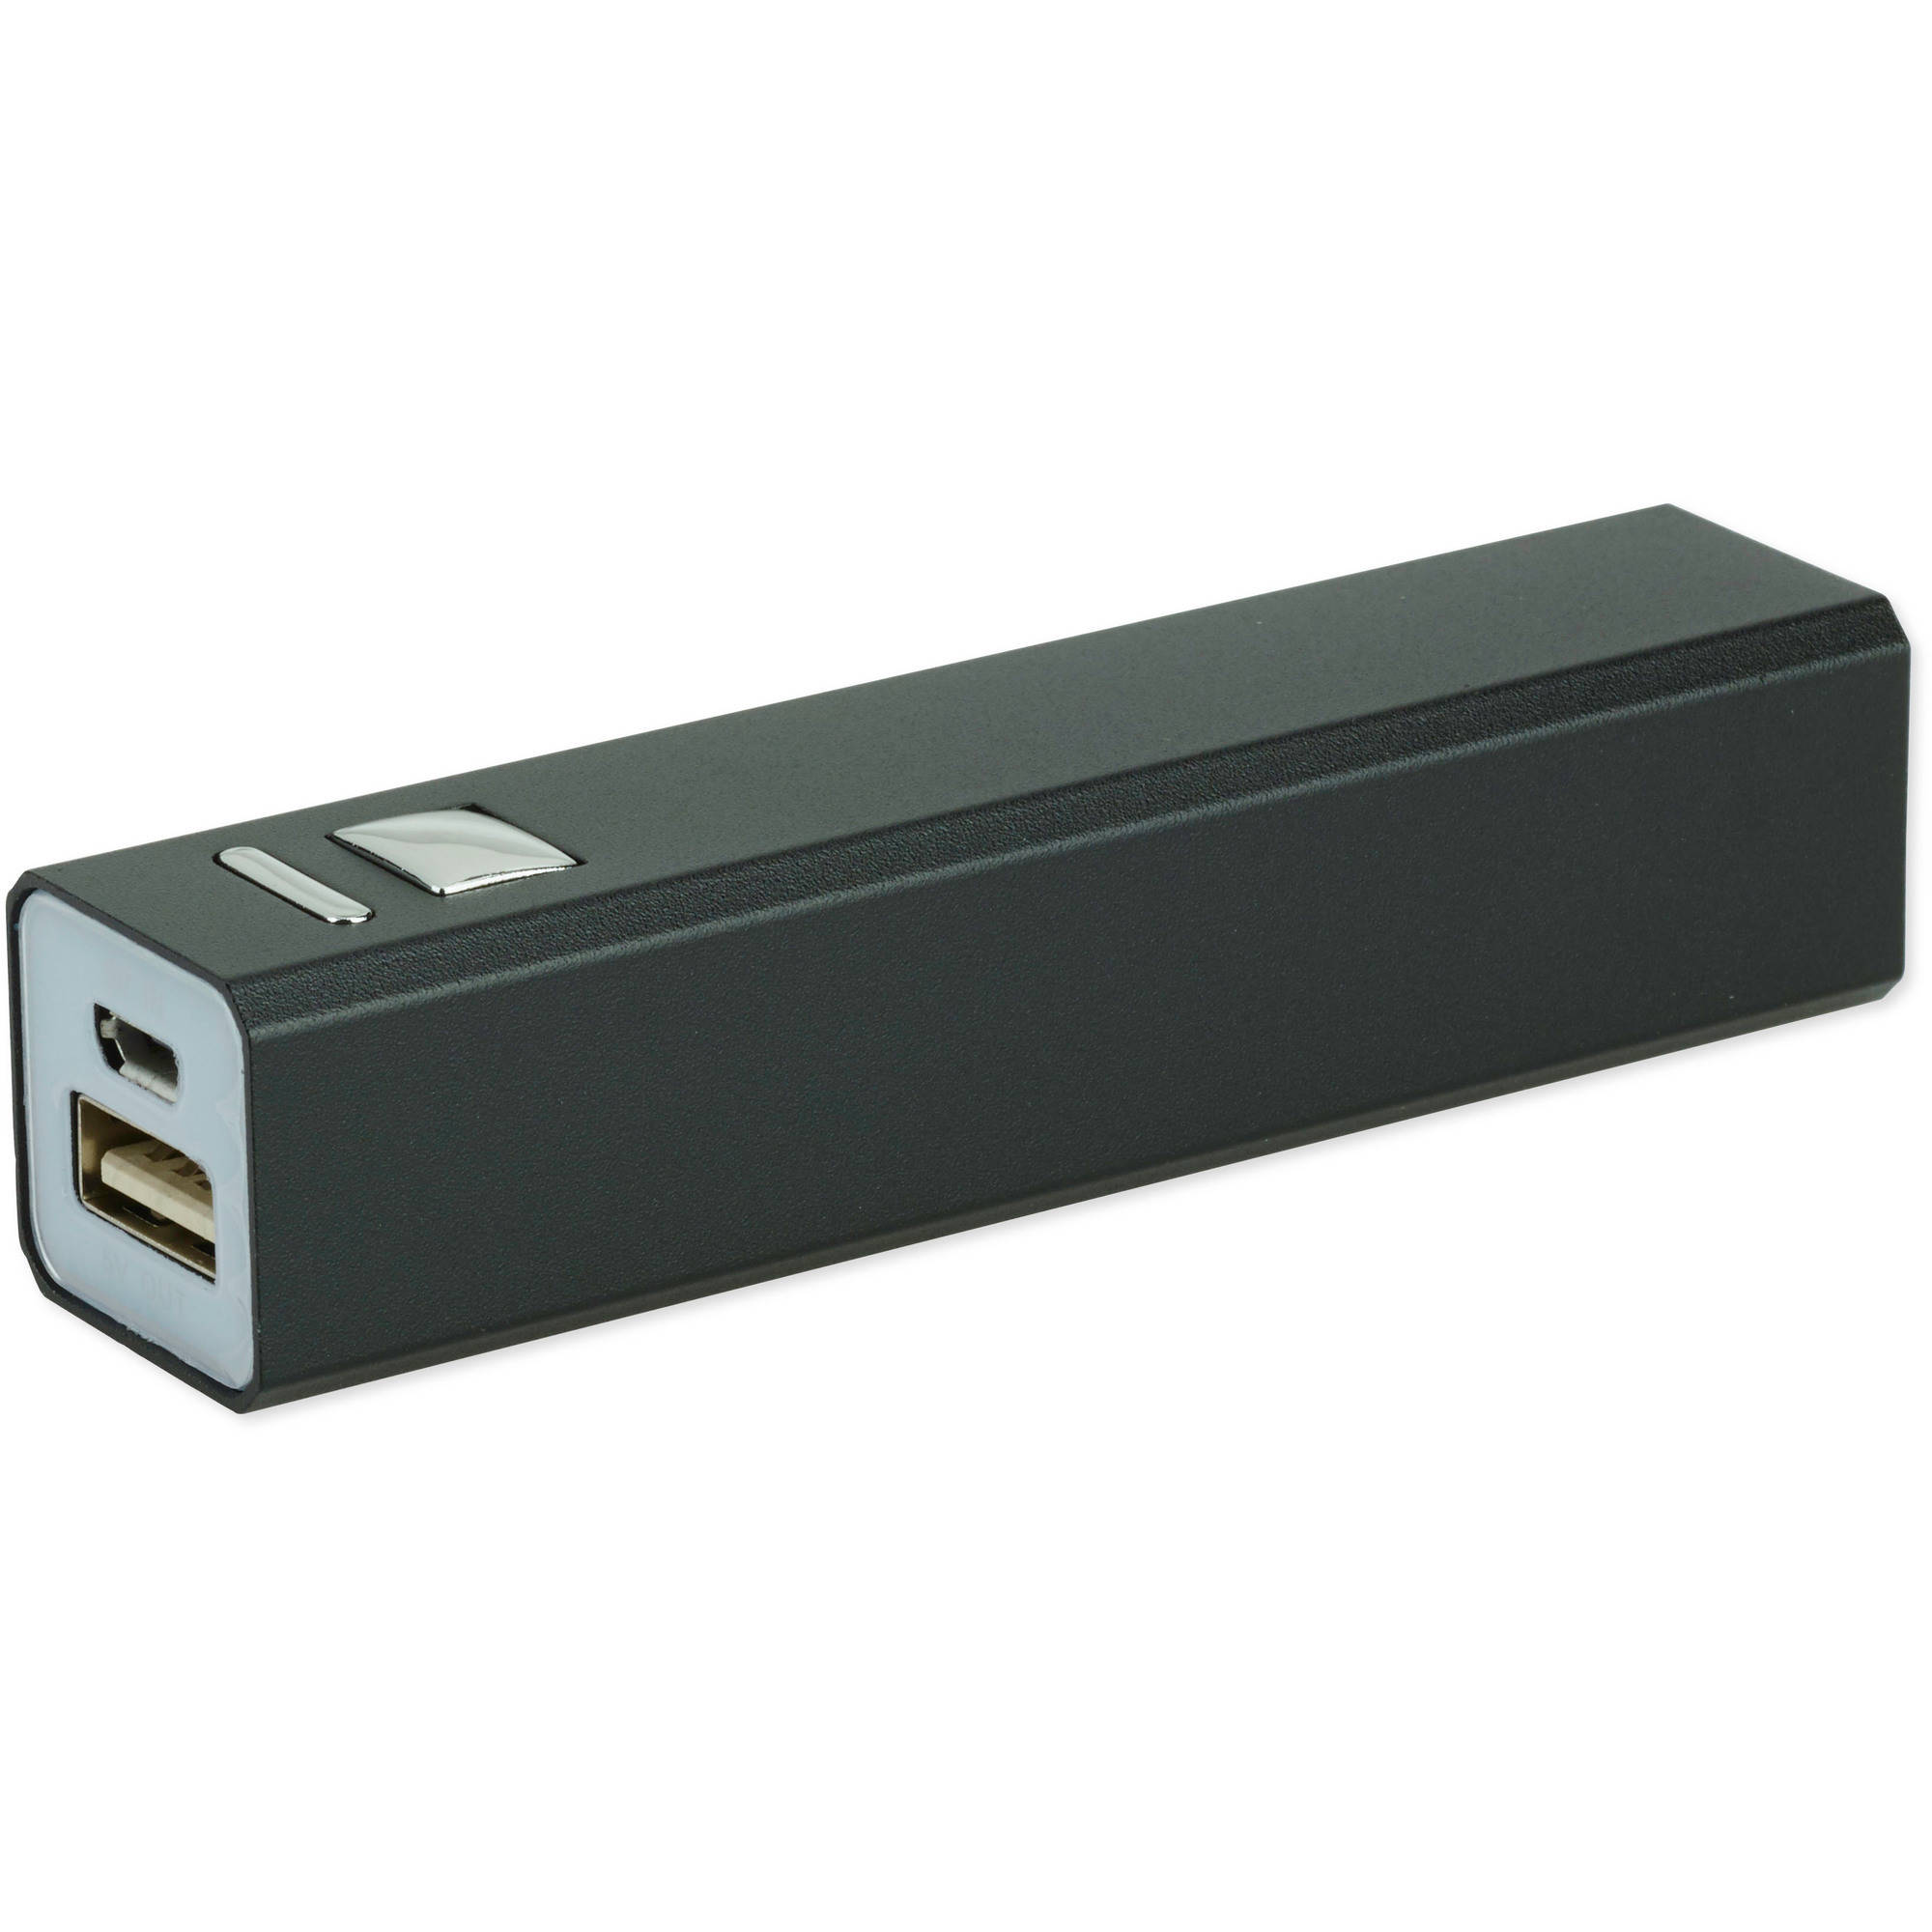 Auto Drive 2200mAh USB portable power bank for $1